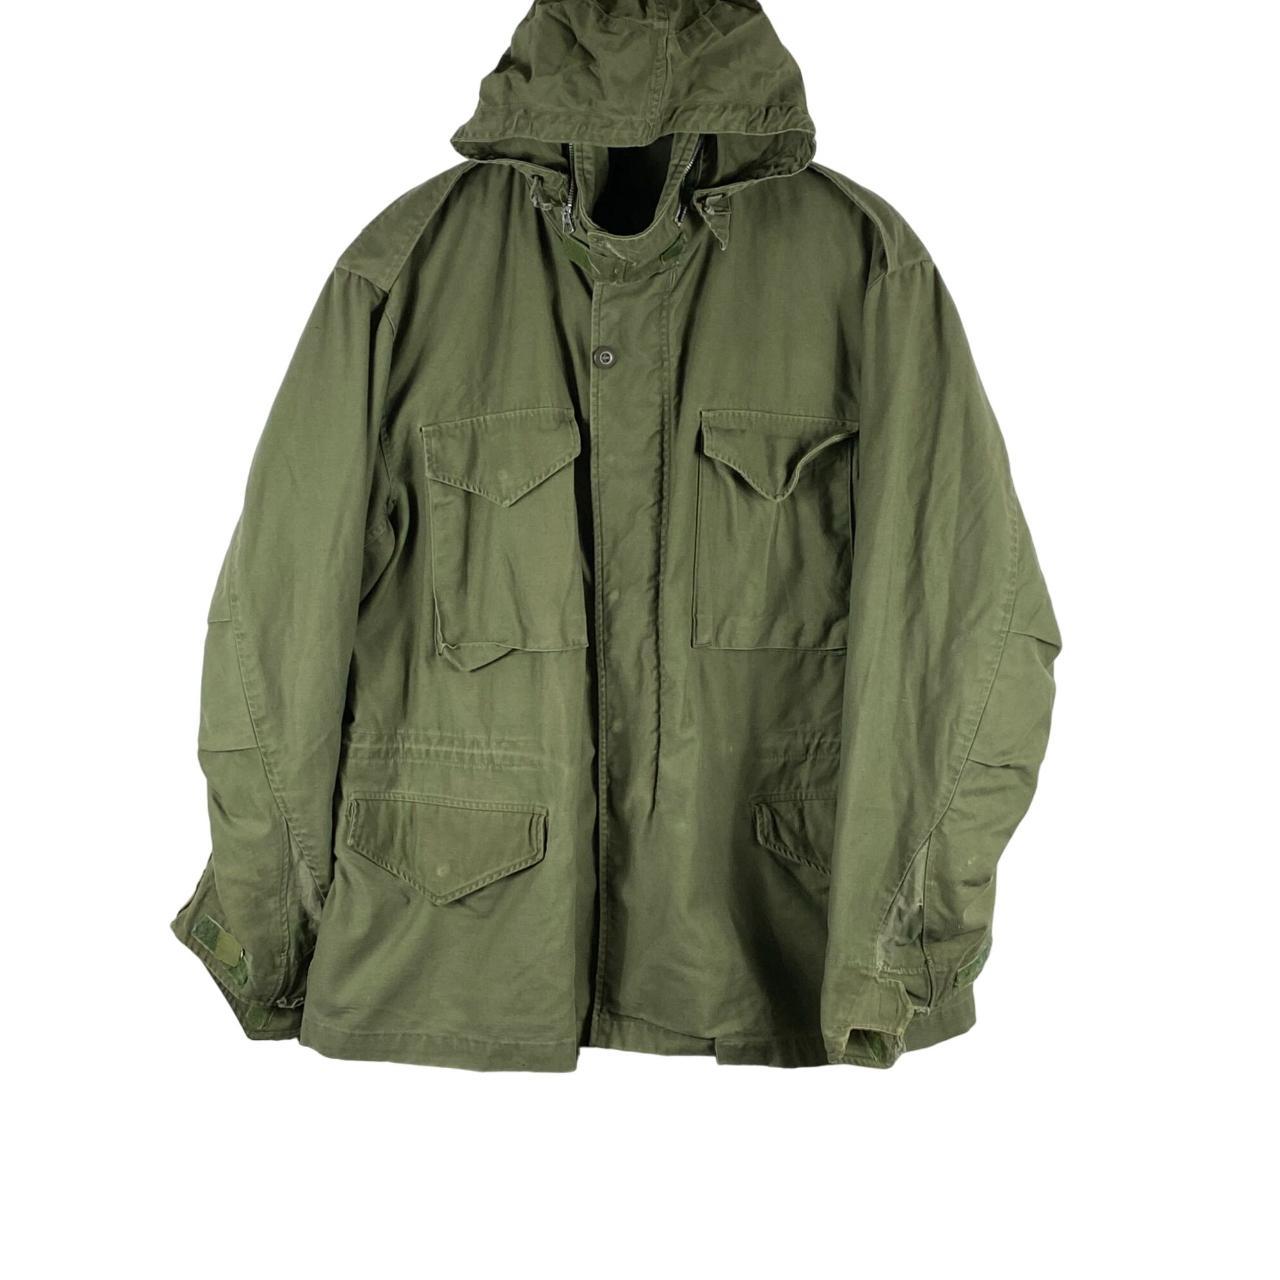 Vintage Military Parka Style Field Jacket Green Size... - Depop